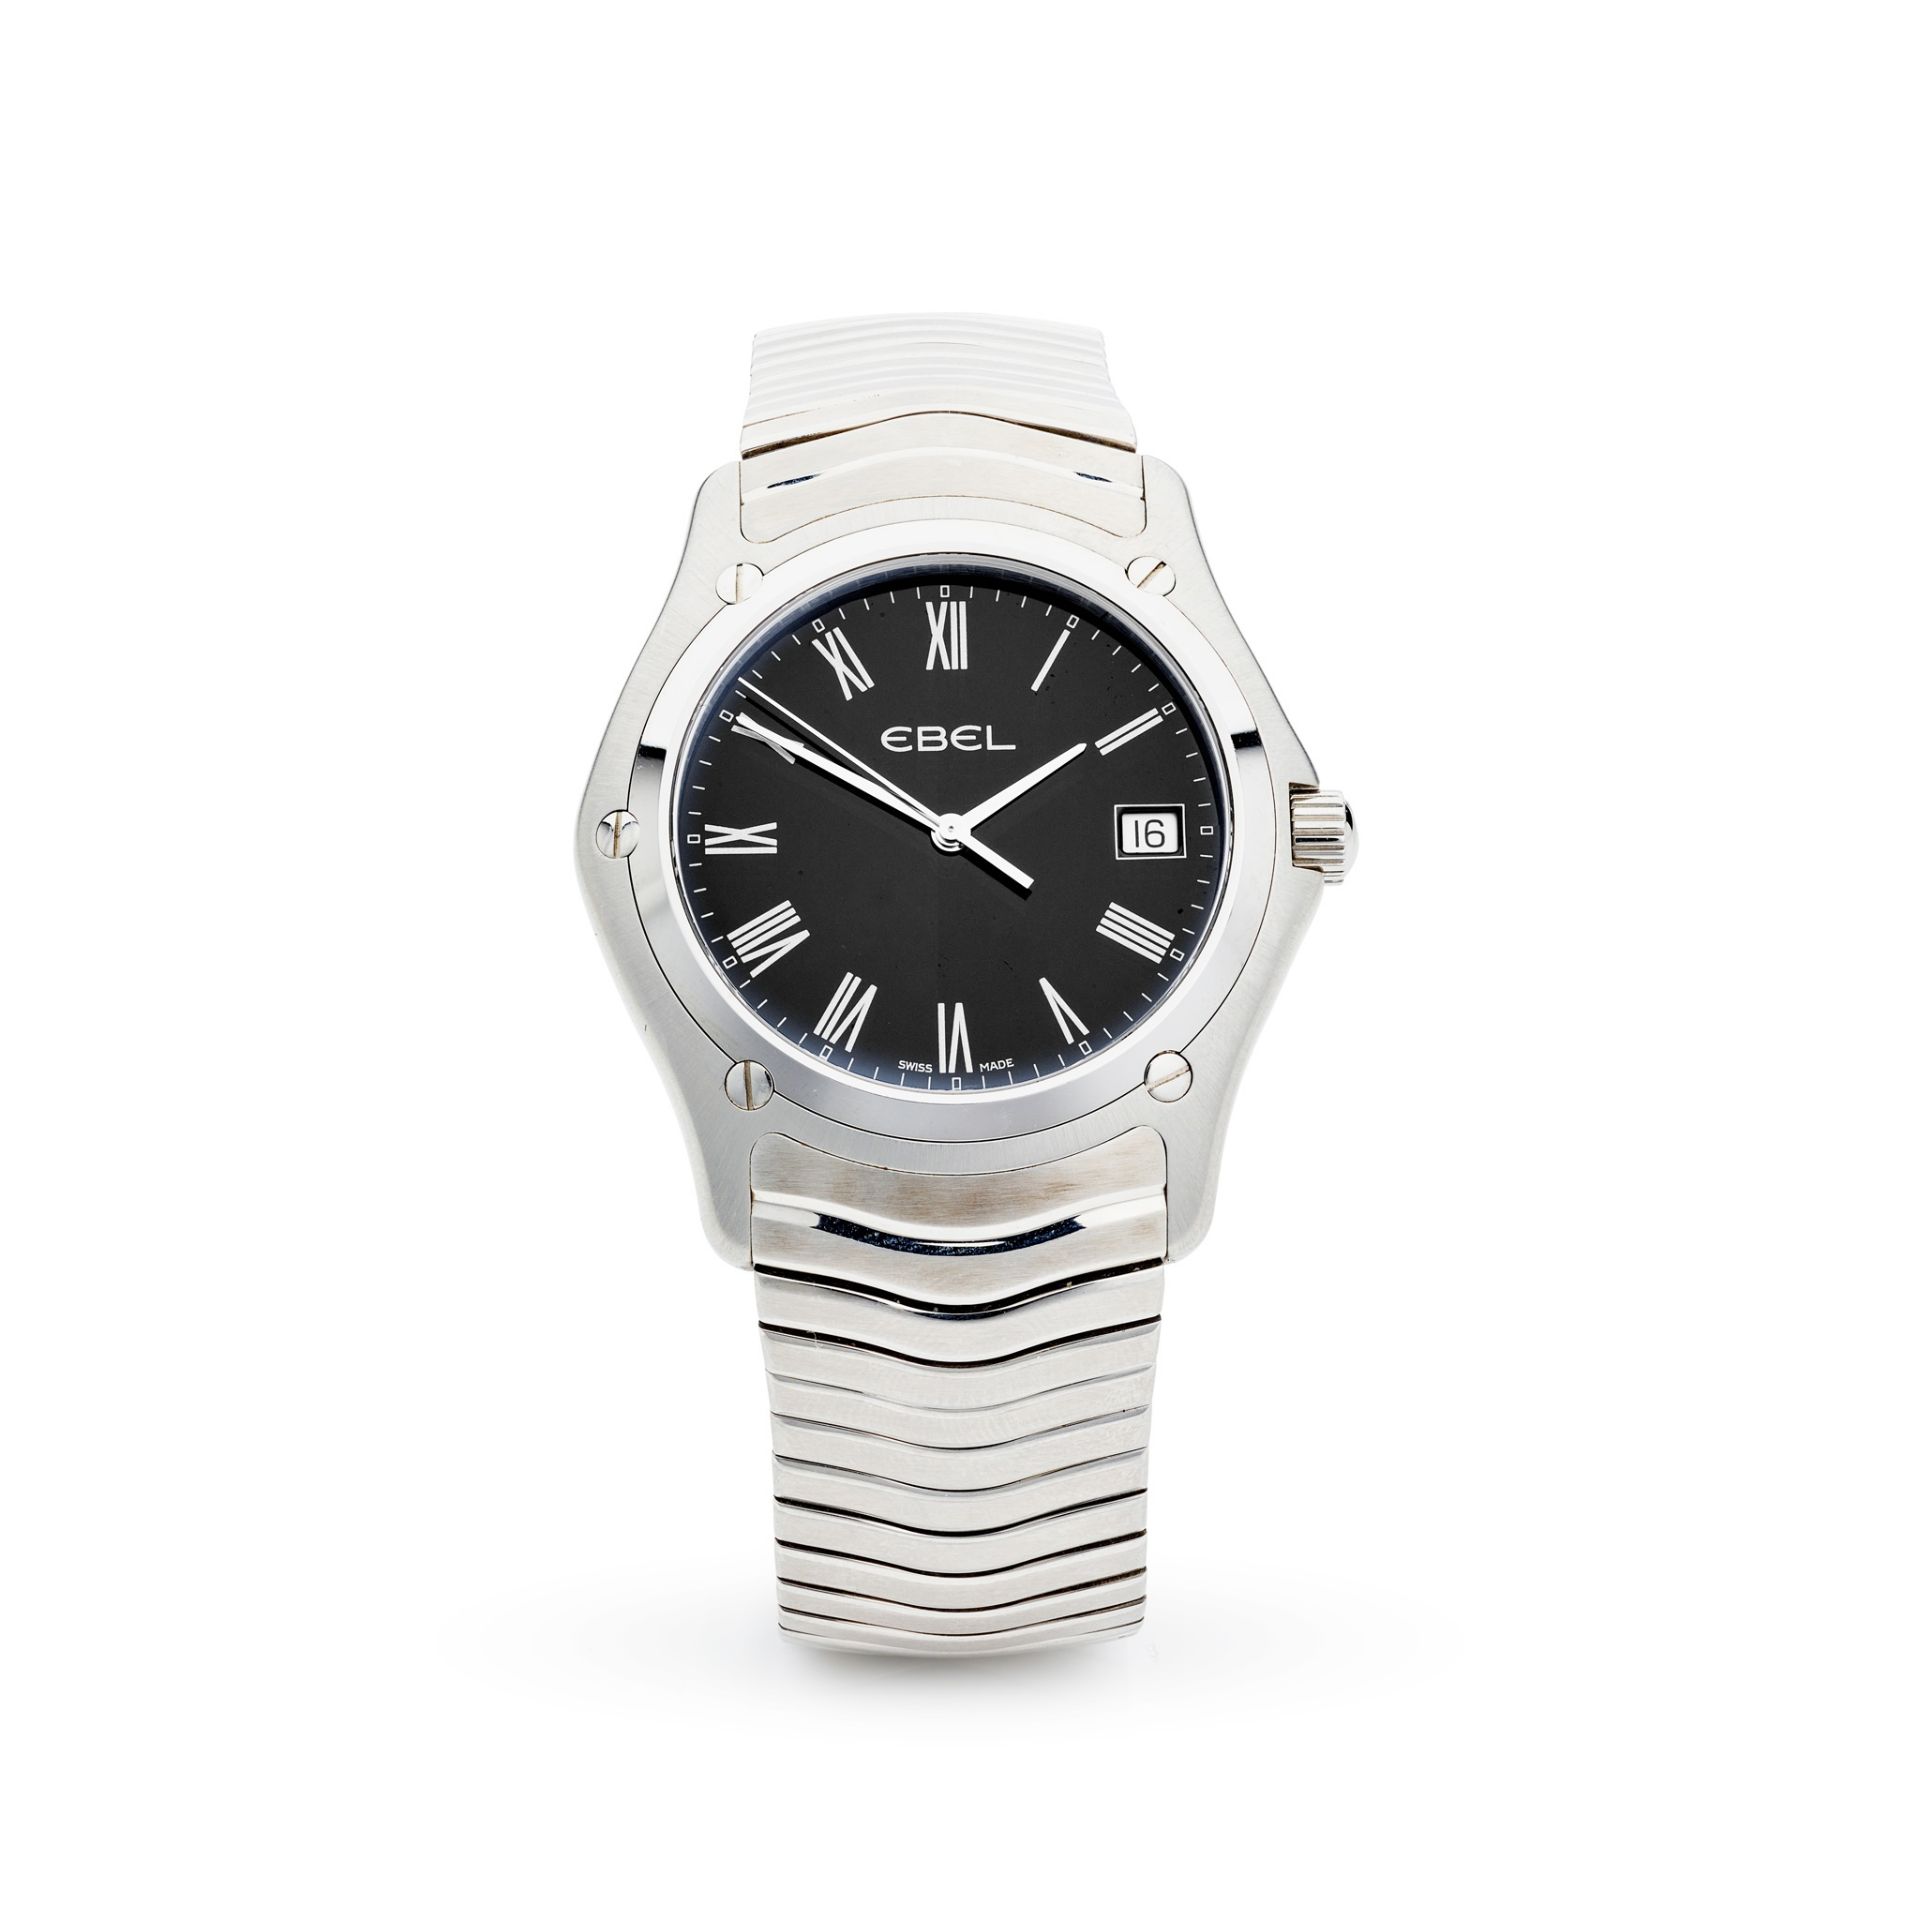 Ebel: a gentleman's steel wrist watch